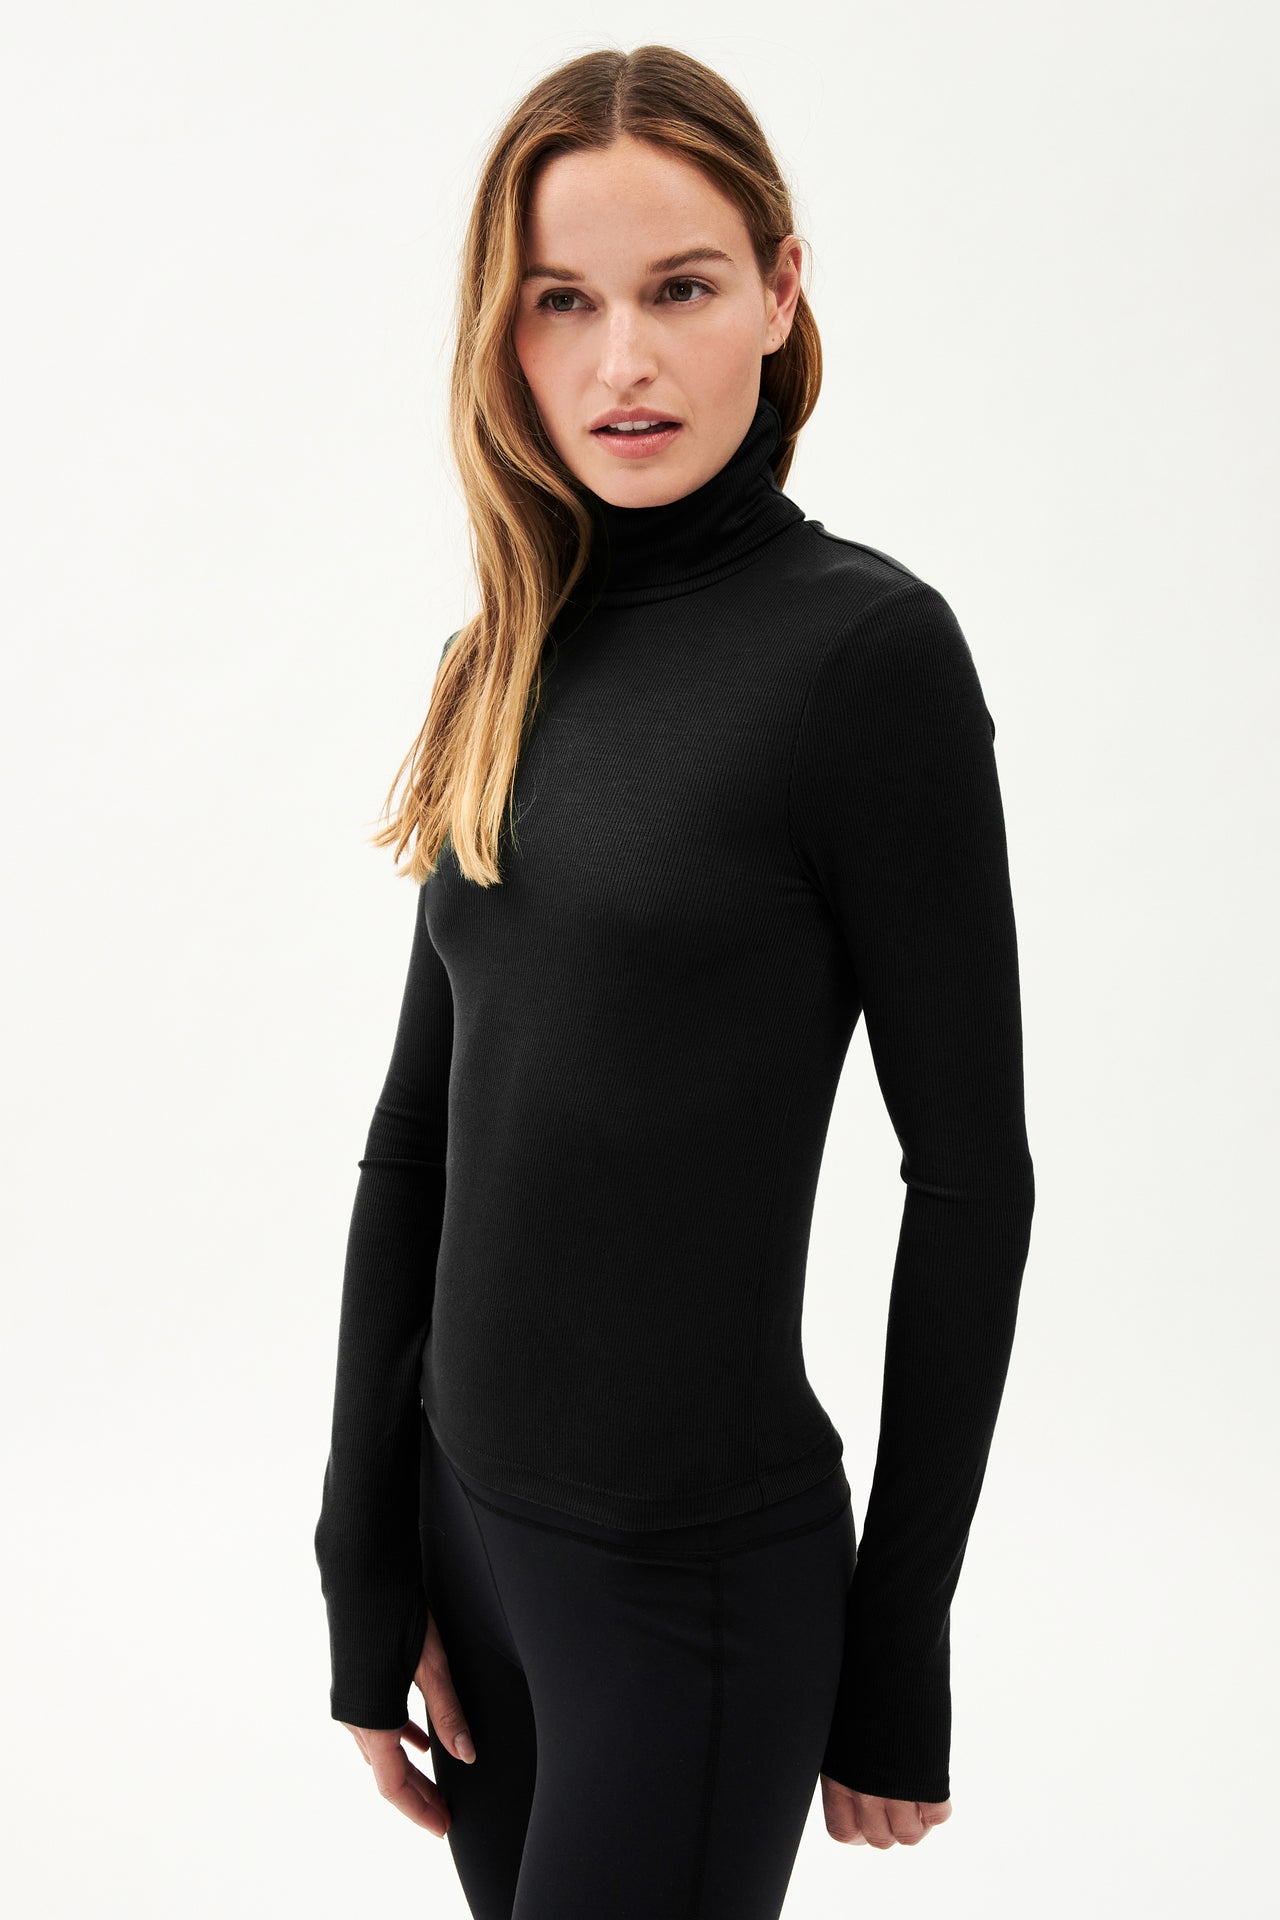 A woman wearing a SPLITS59 Jackson Rib Full Length Turtleneck in Black and leggings, ready for yoga.